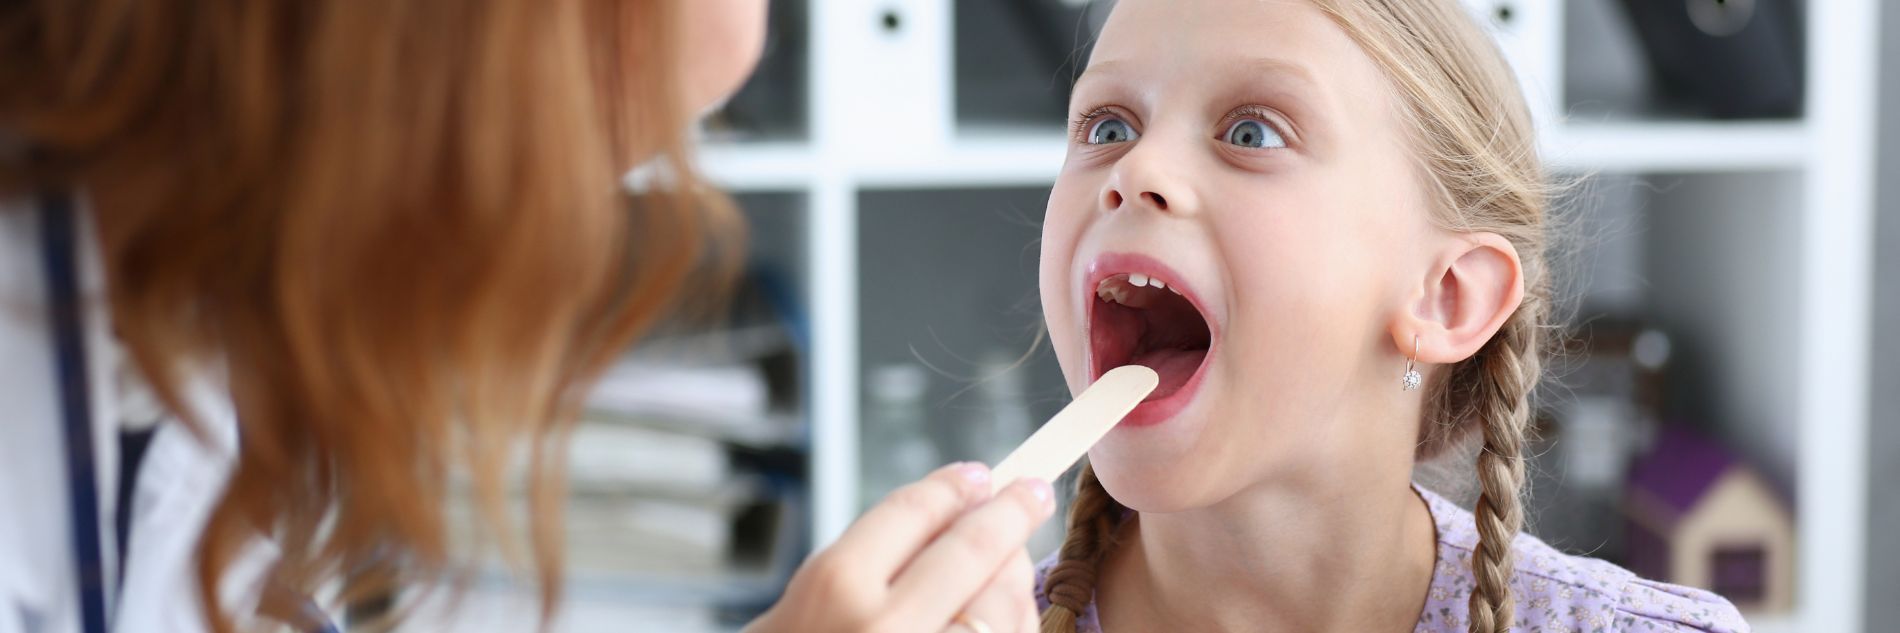 A little girl having her throat examined